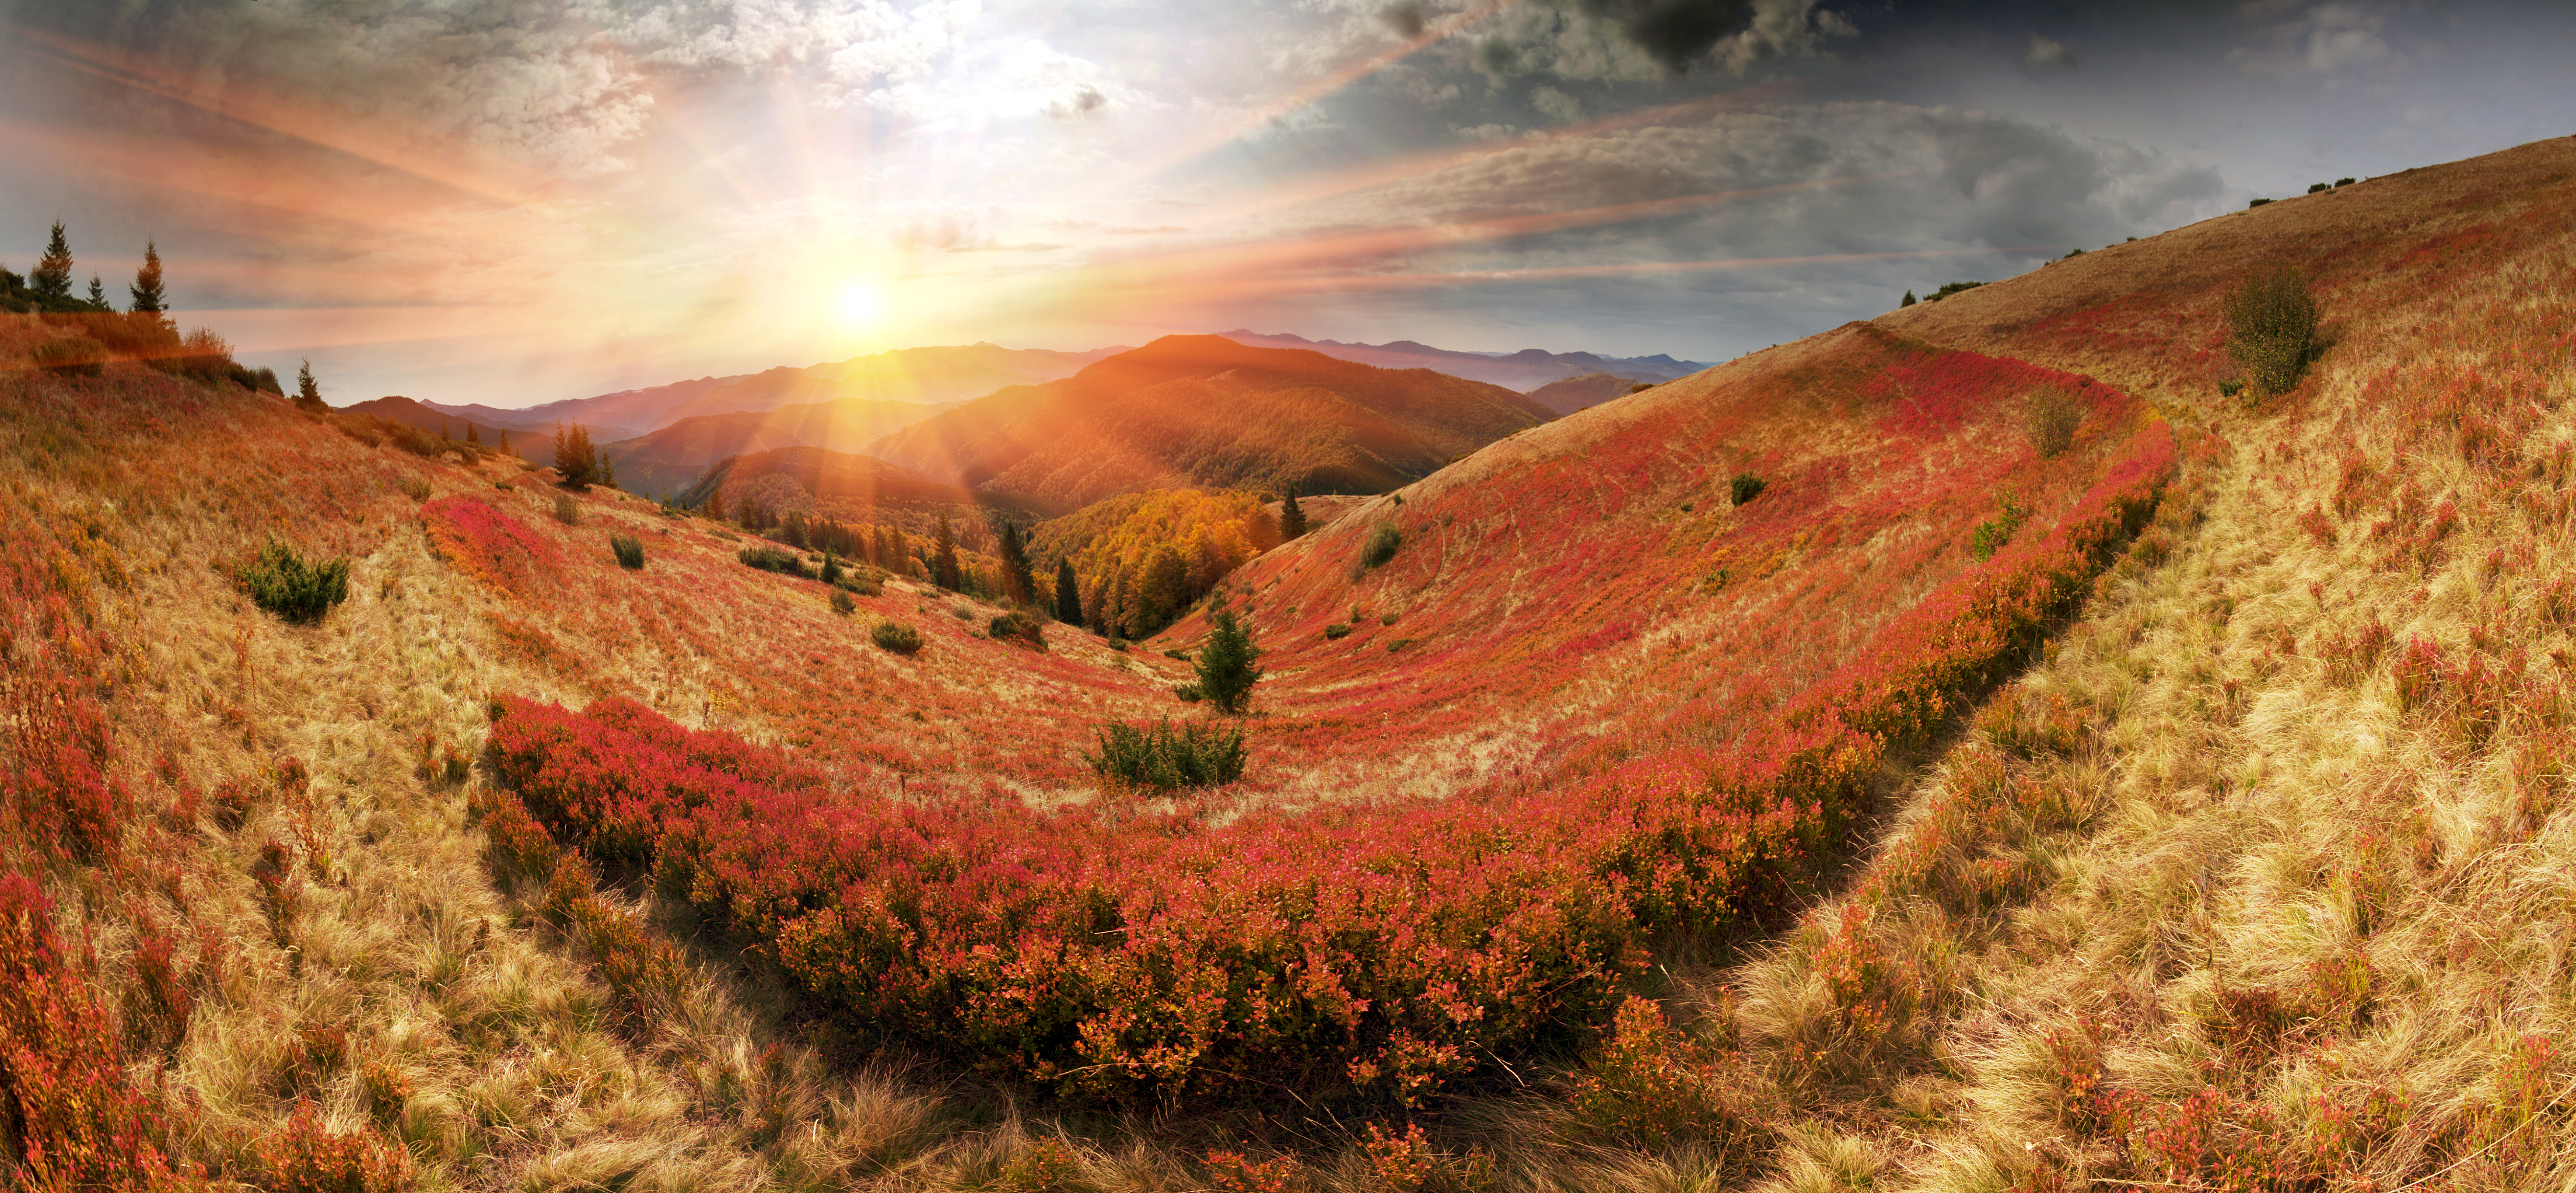 Handy-Wallpaper Landschaft, Natur, Herbst, Horizont, Sonnenaufgang, Sonnenstrahl, Erde/natur kostenlos herunterladen.